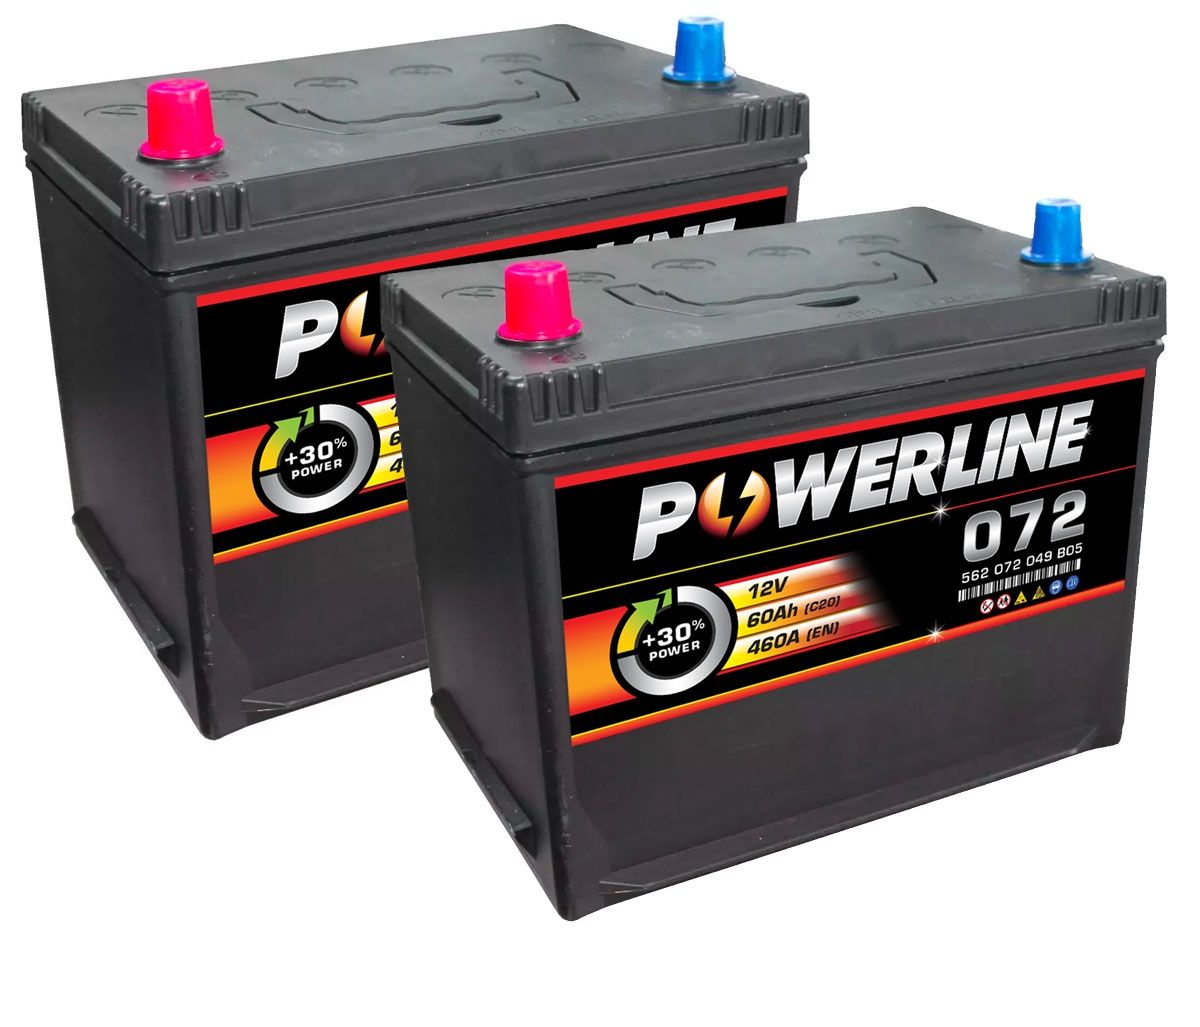 Pair of 072 Powerline Car Battery 12V - Car Batteries